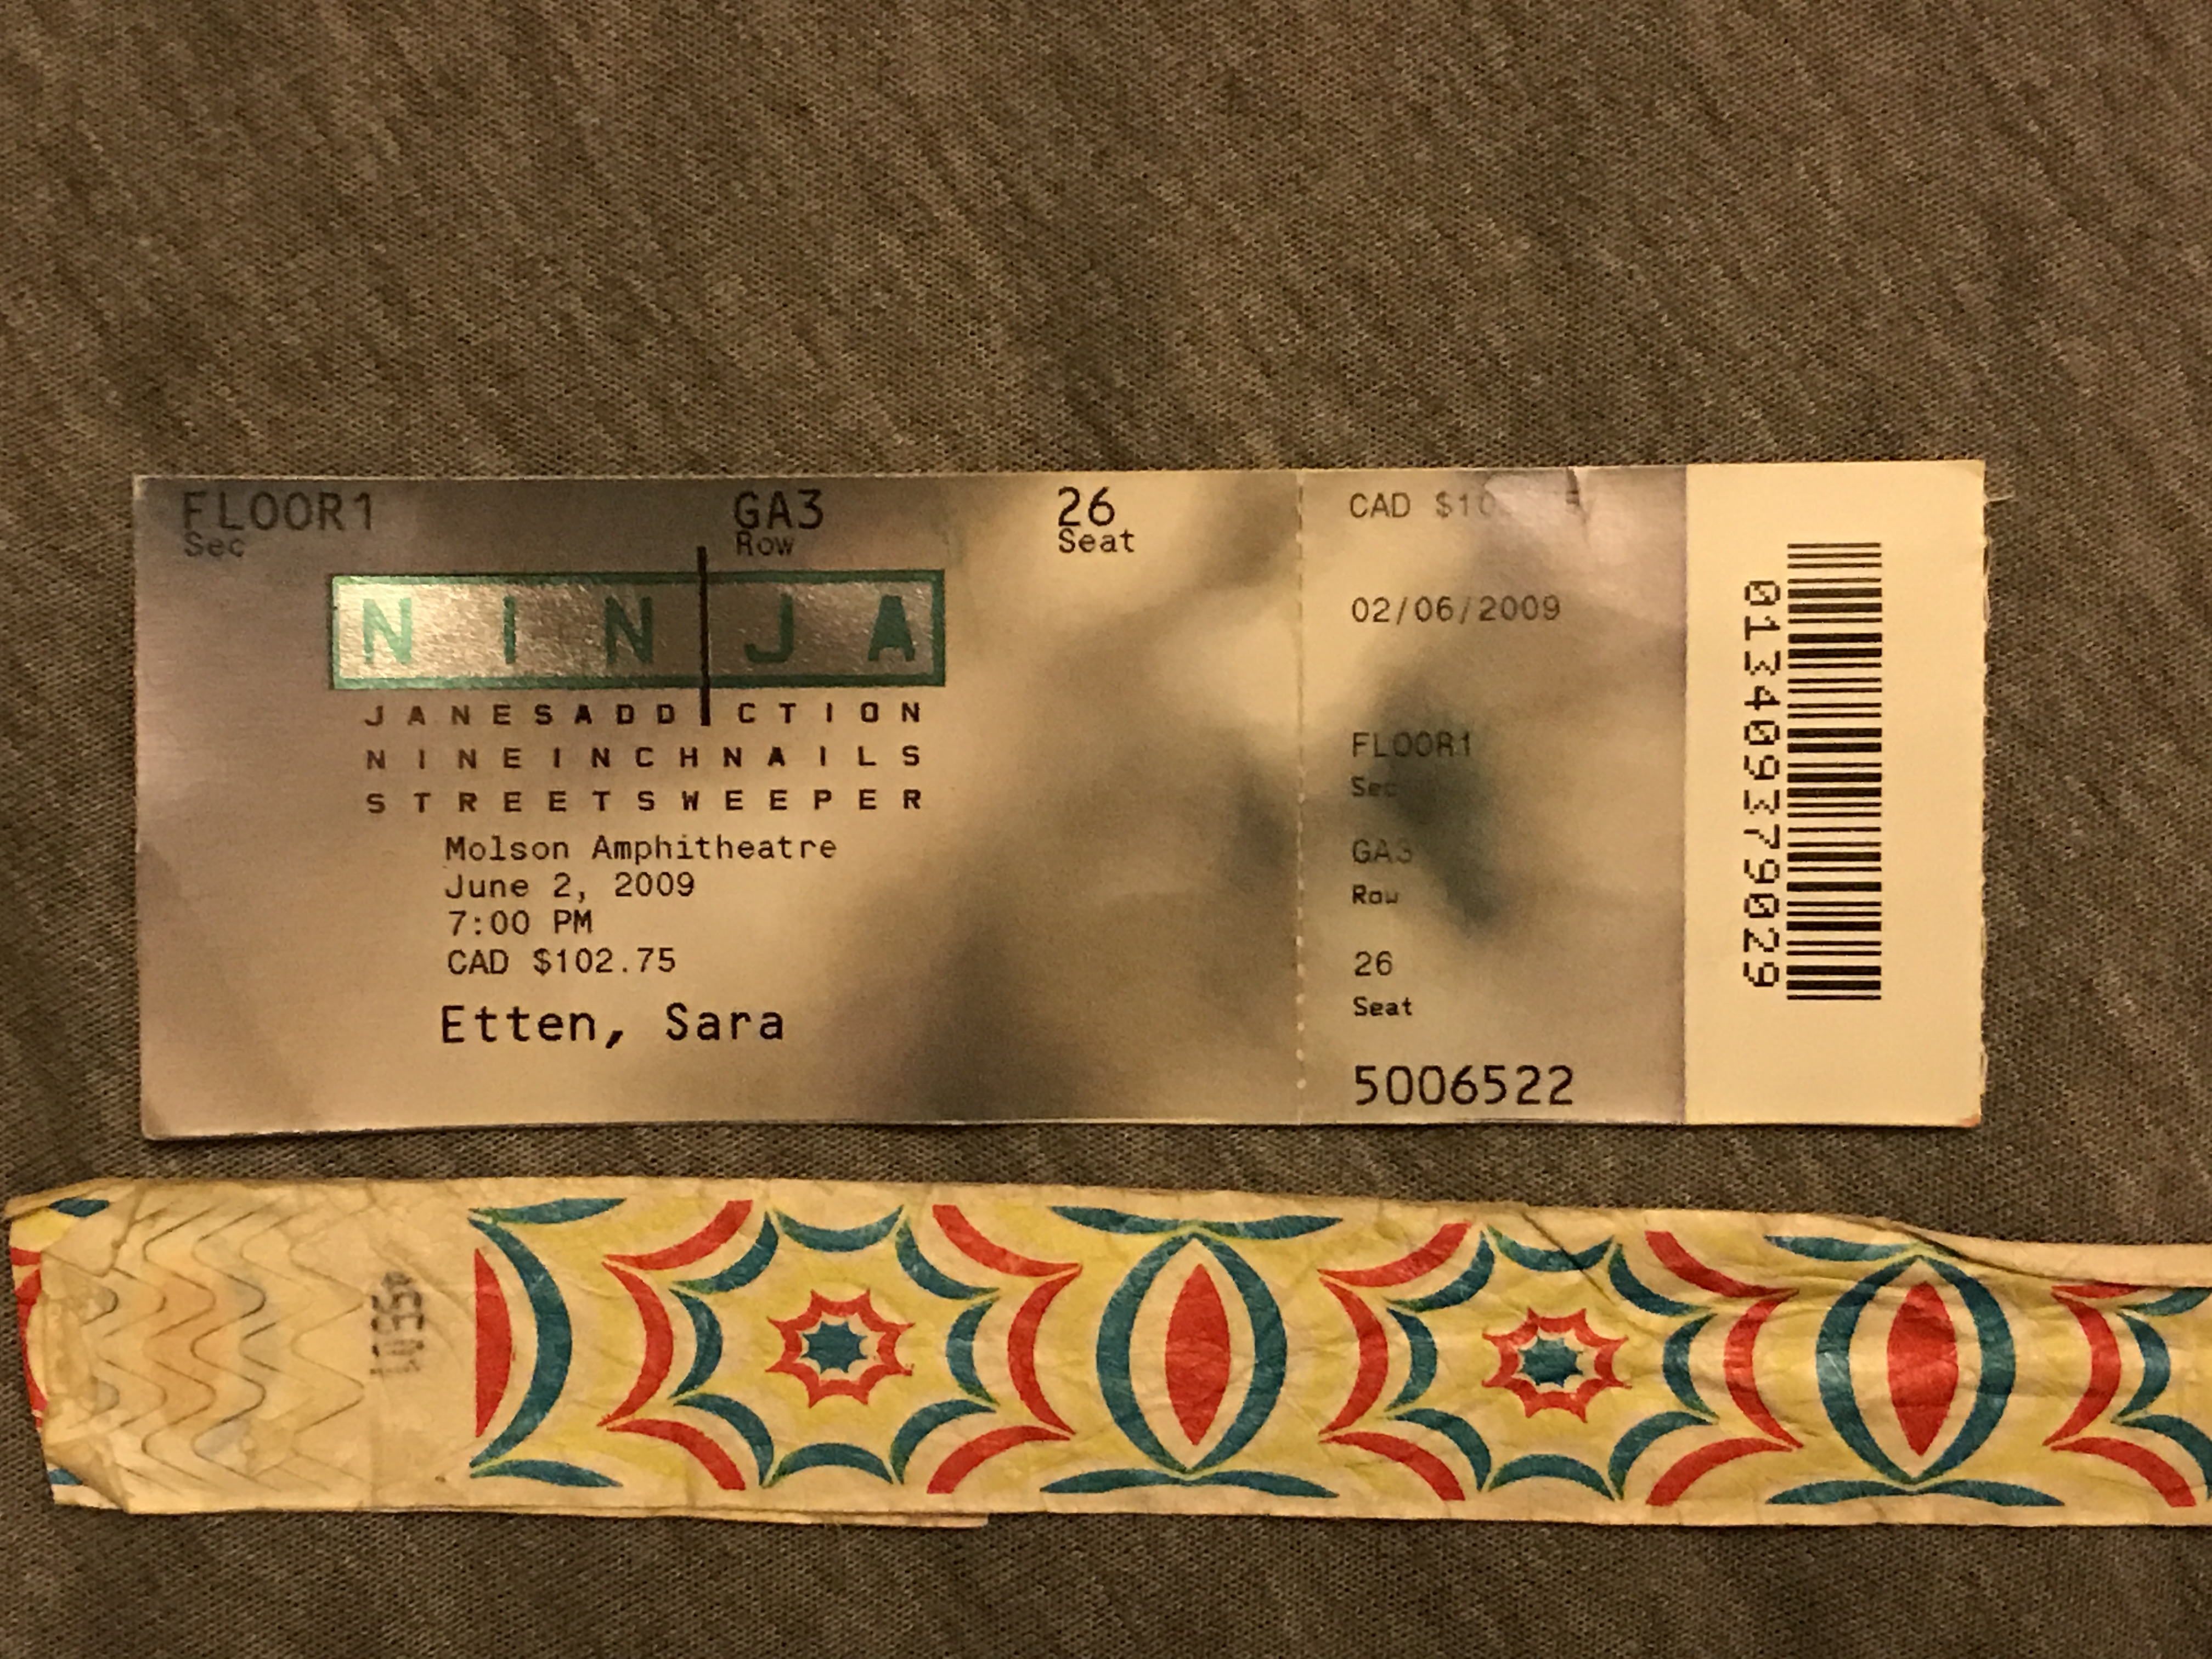 2009/06/02 Ticket